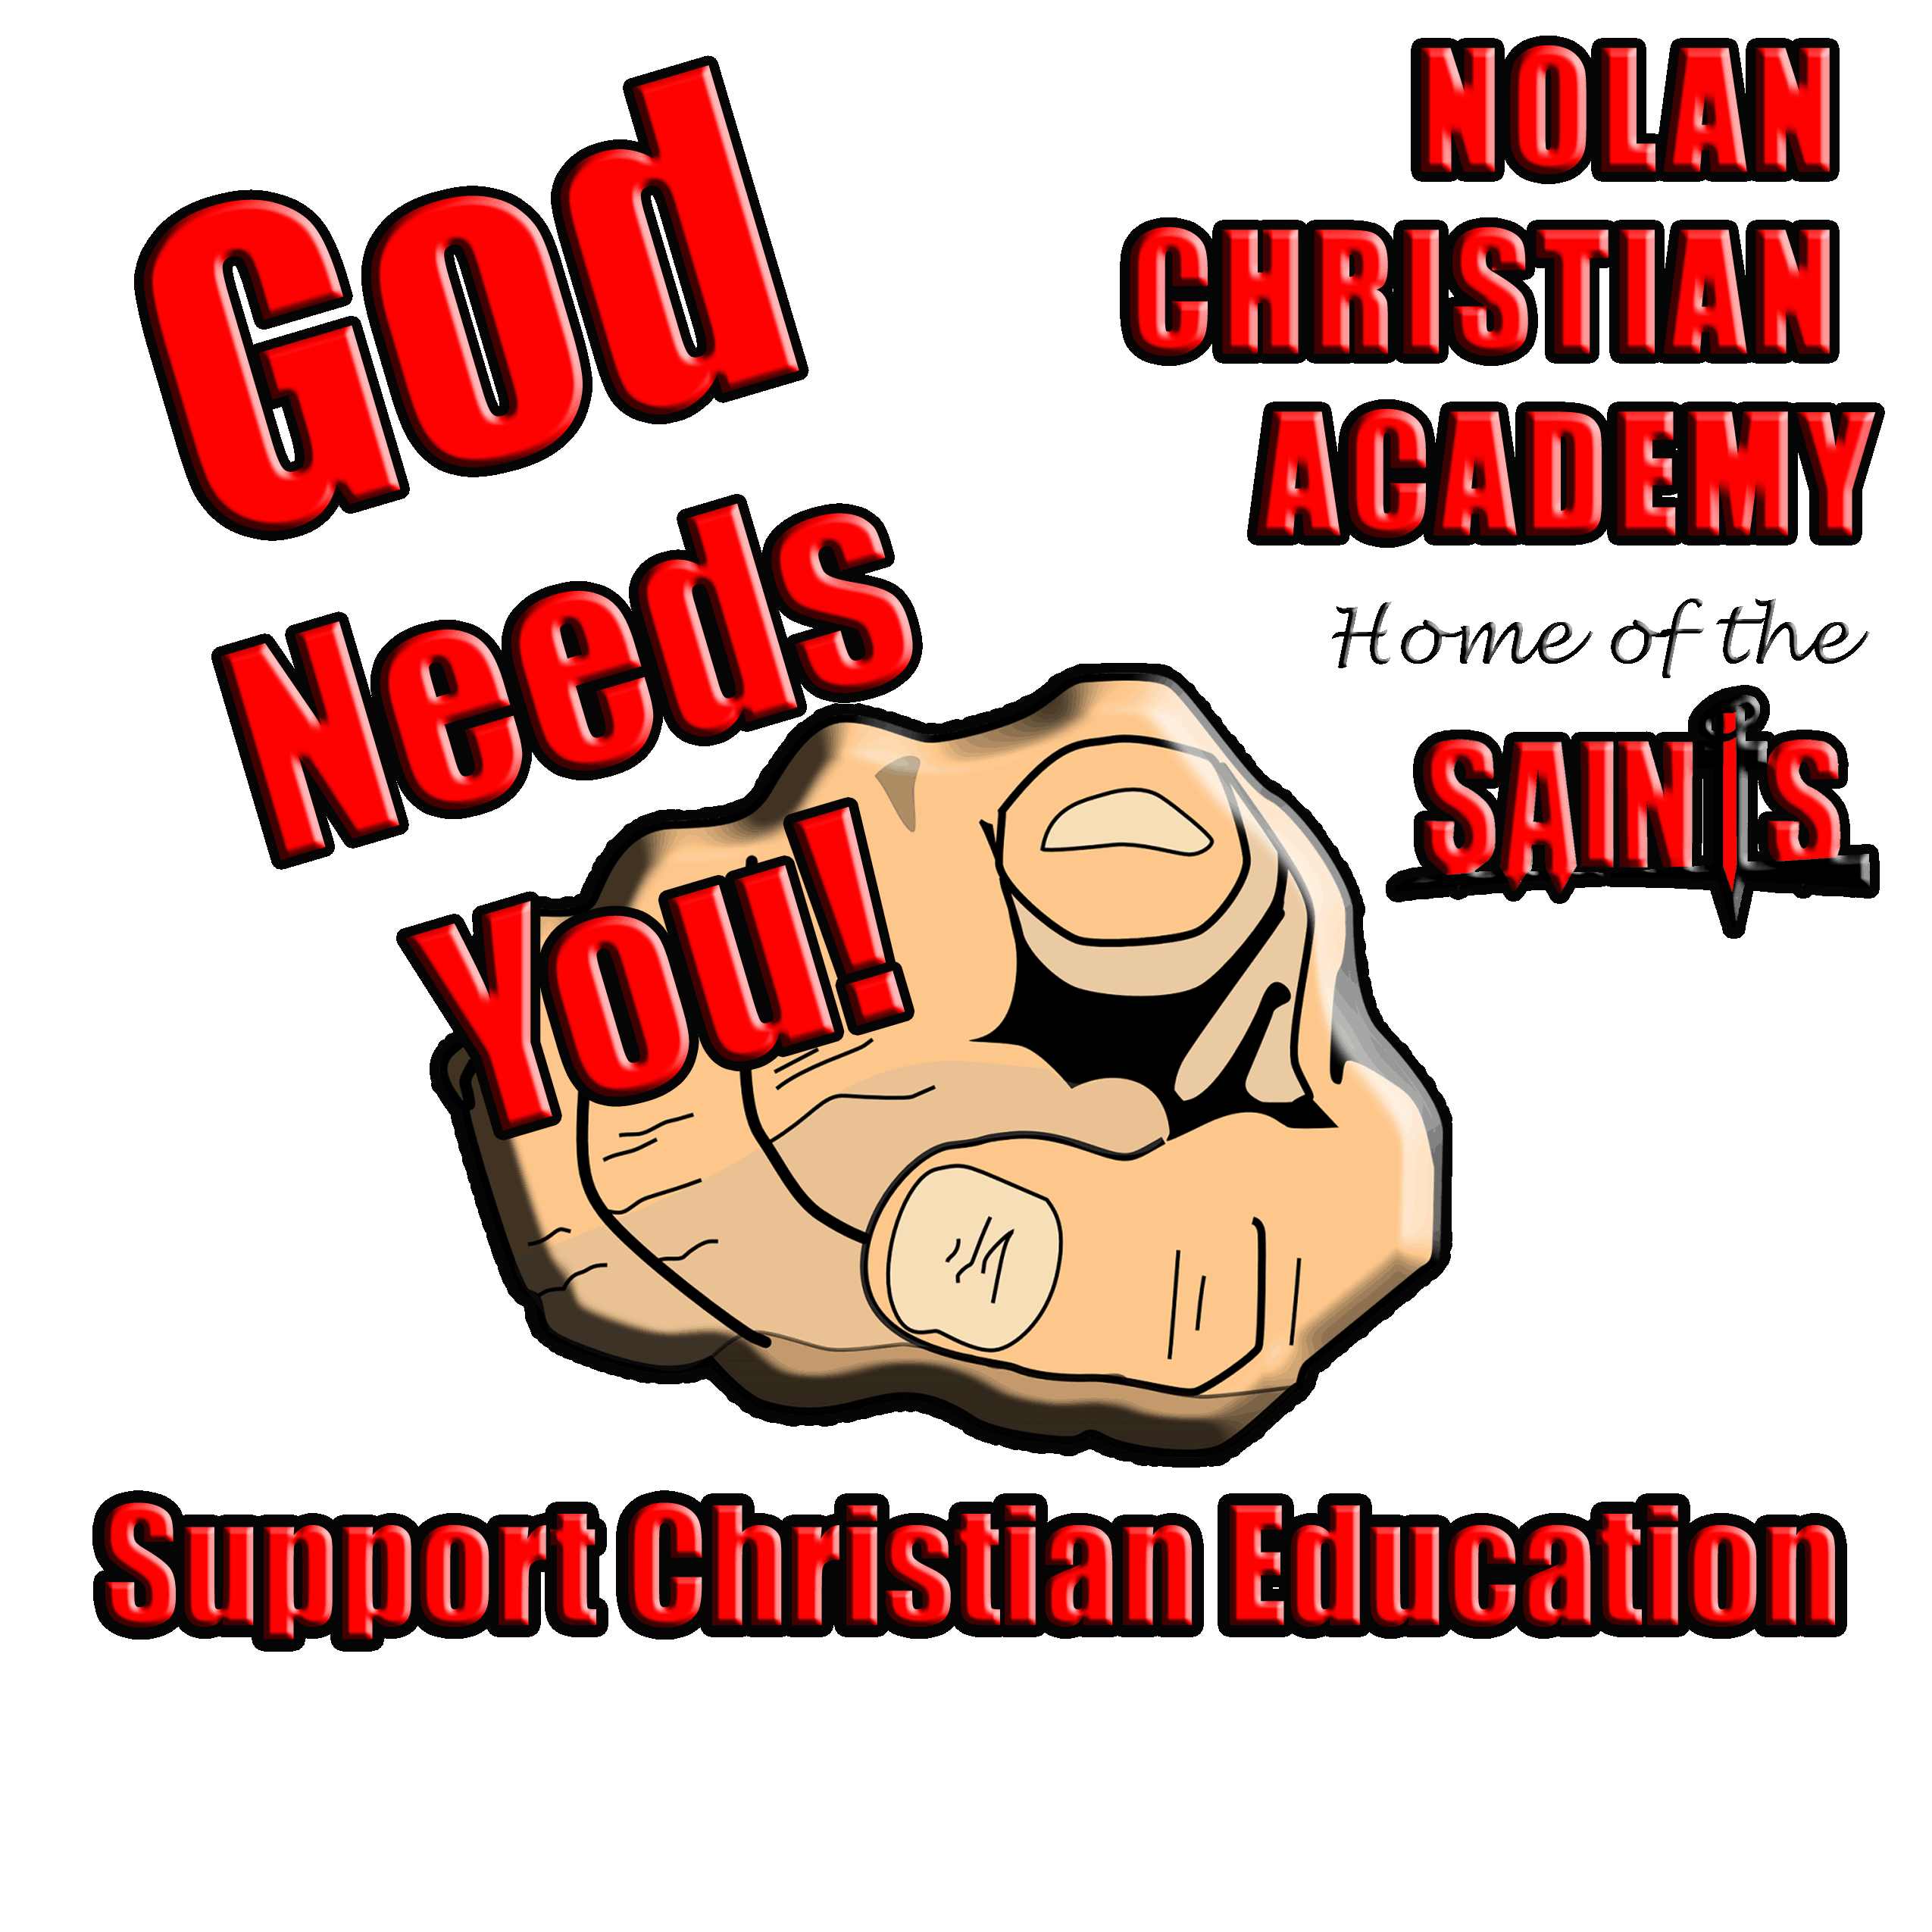 God Needs You